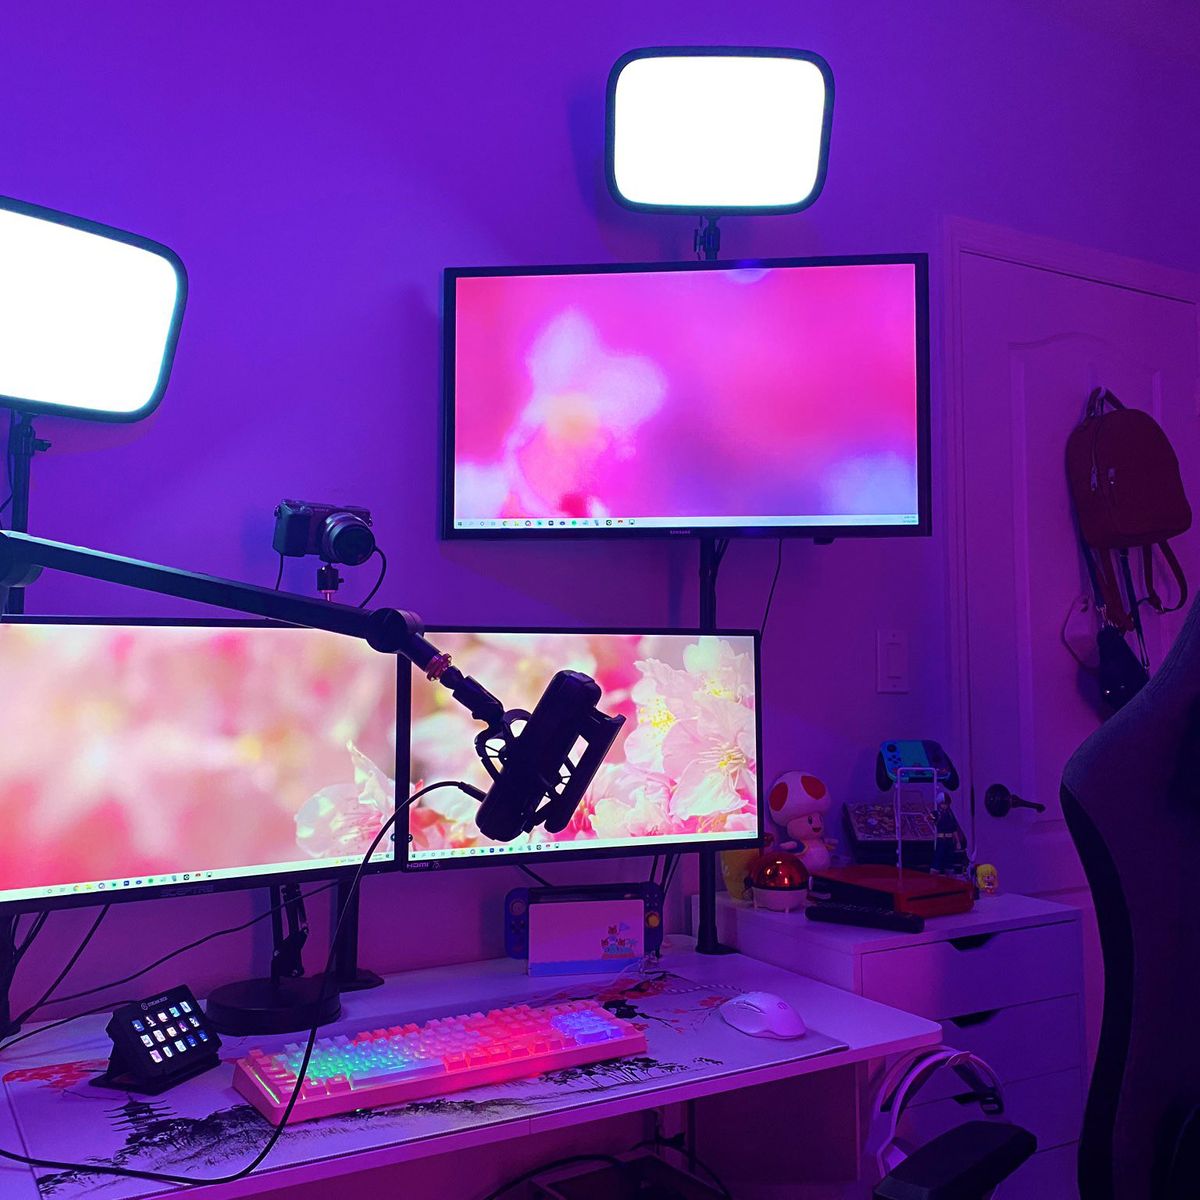 Gamer BEAUTIFUL COLORS Gaming Desk LIGHTING KIT Remote Control all COLORS 